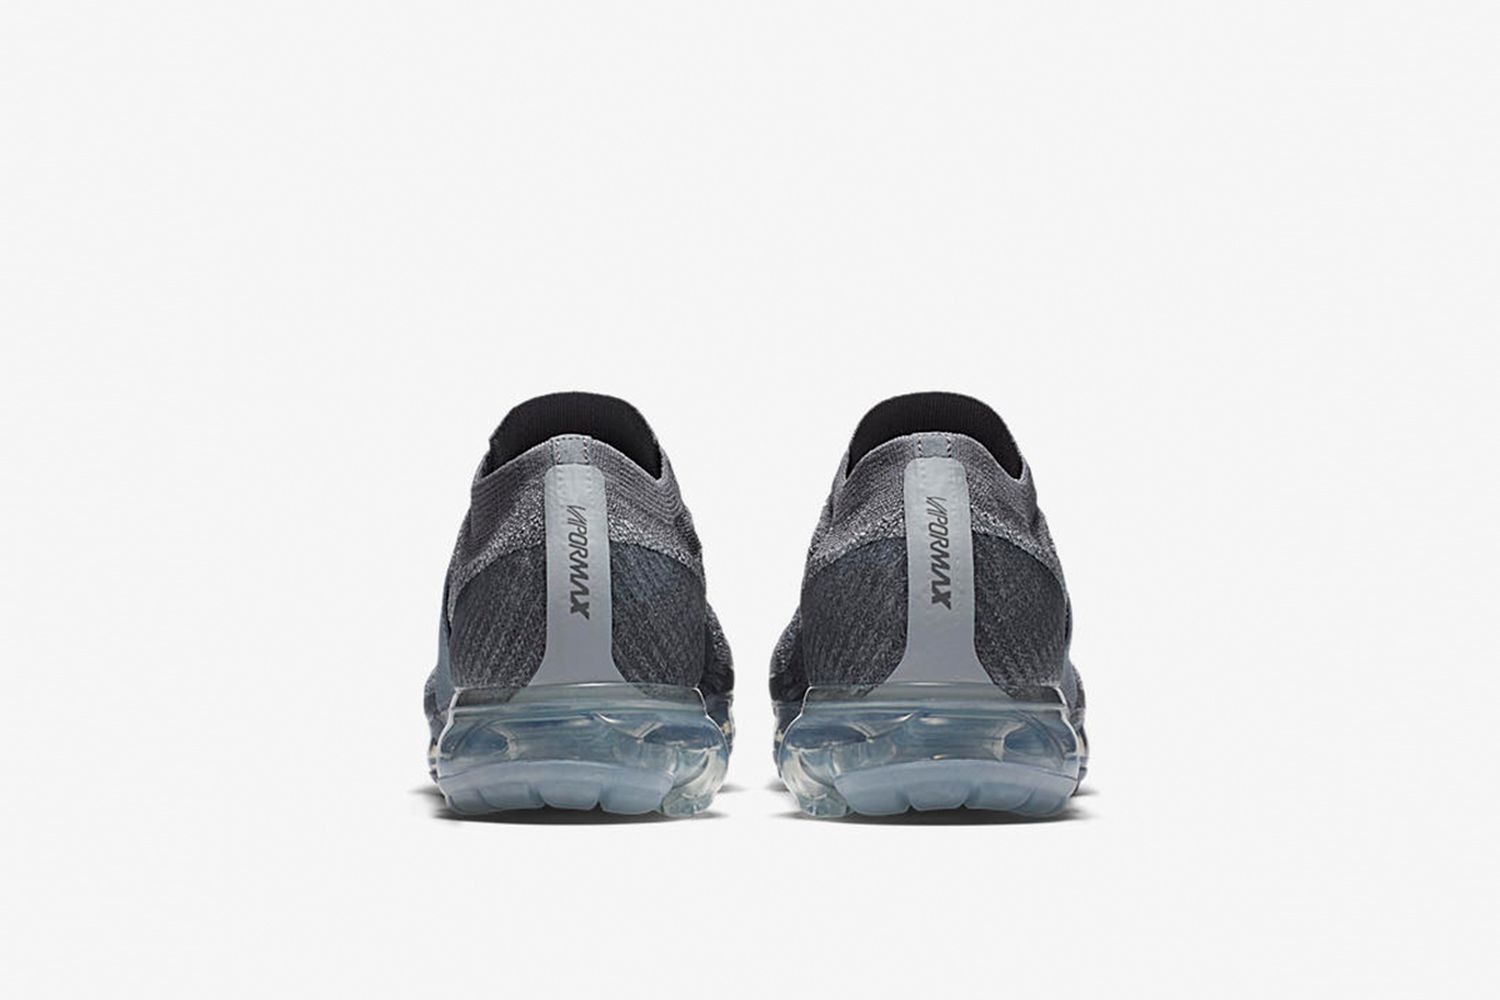 Nike Air Force 270 Safari: Release Date, Price & More Info